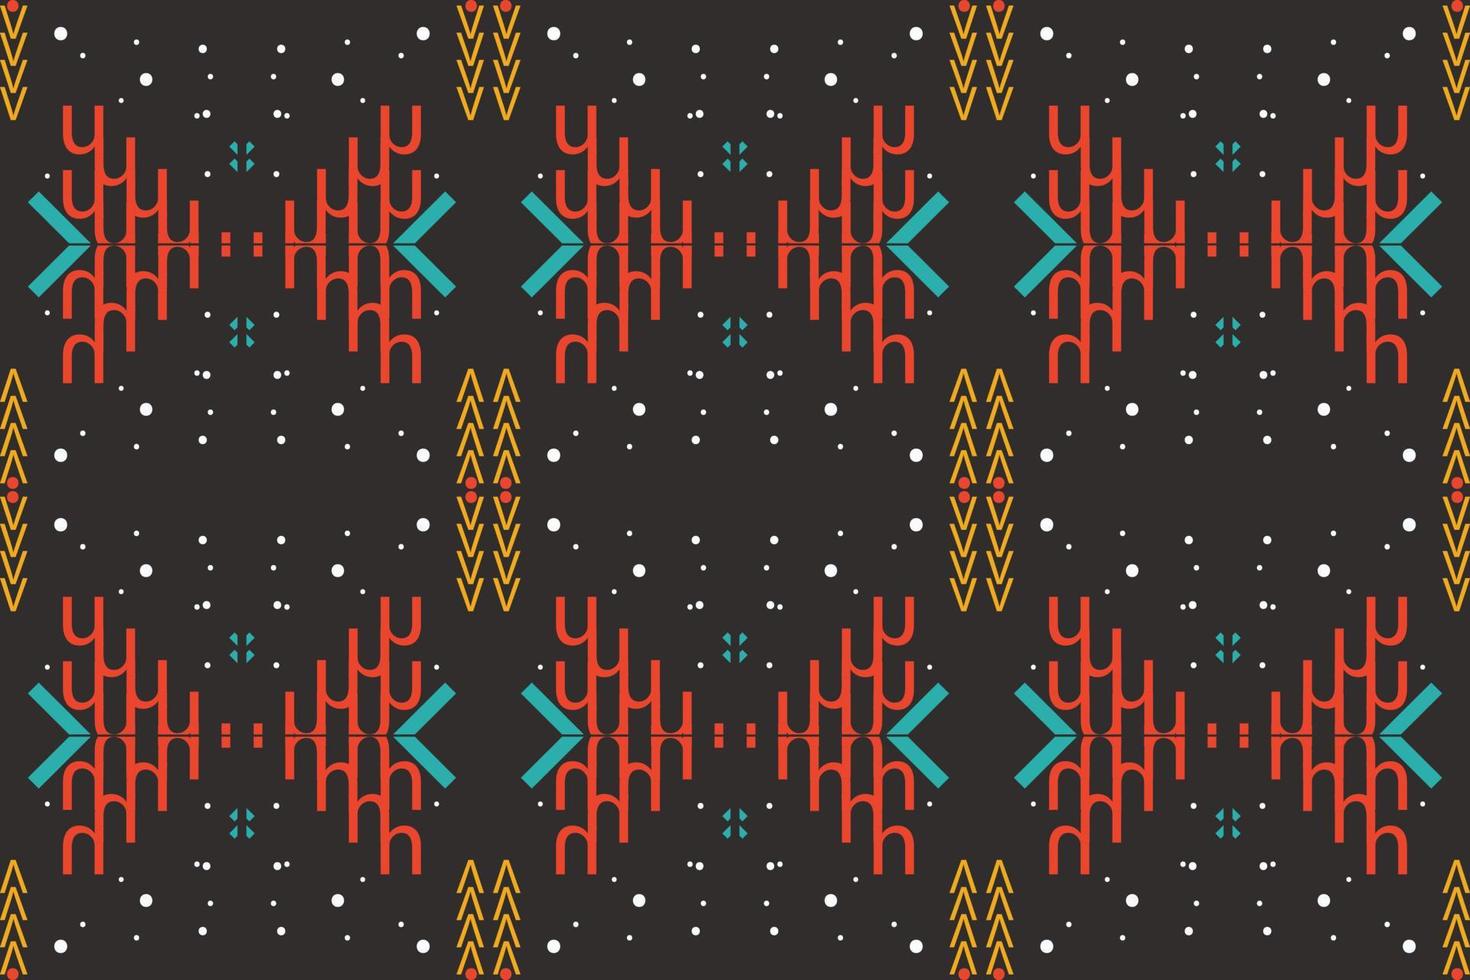 étnico asteca ikat padrão sem costura têxtil filipino ikat padrão sem costura design de vetor digital para impressão saree kurti borneo tecido asteca pincel símbolos amostras elegantes